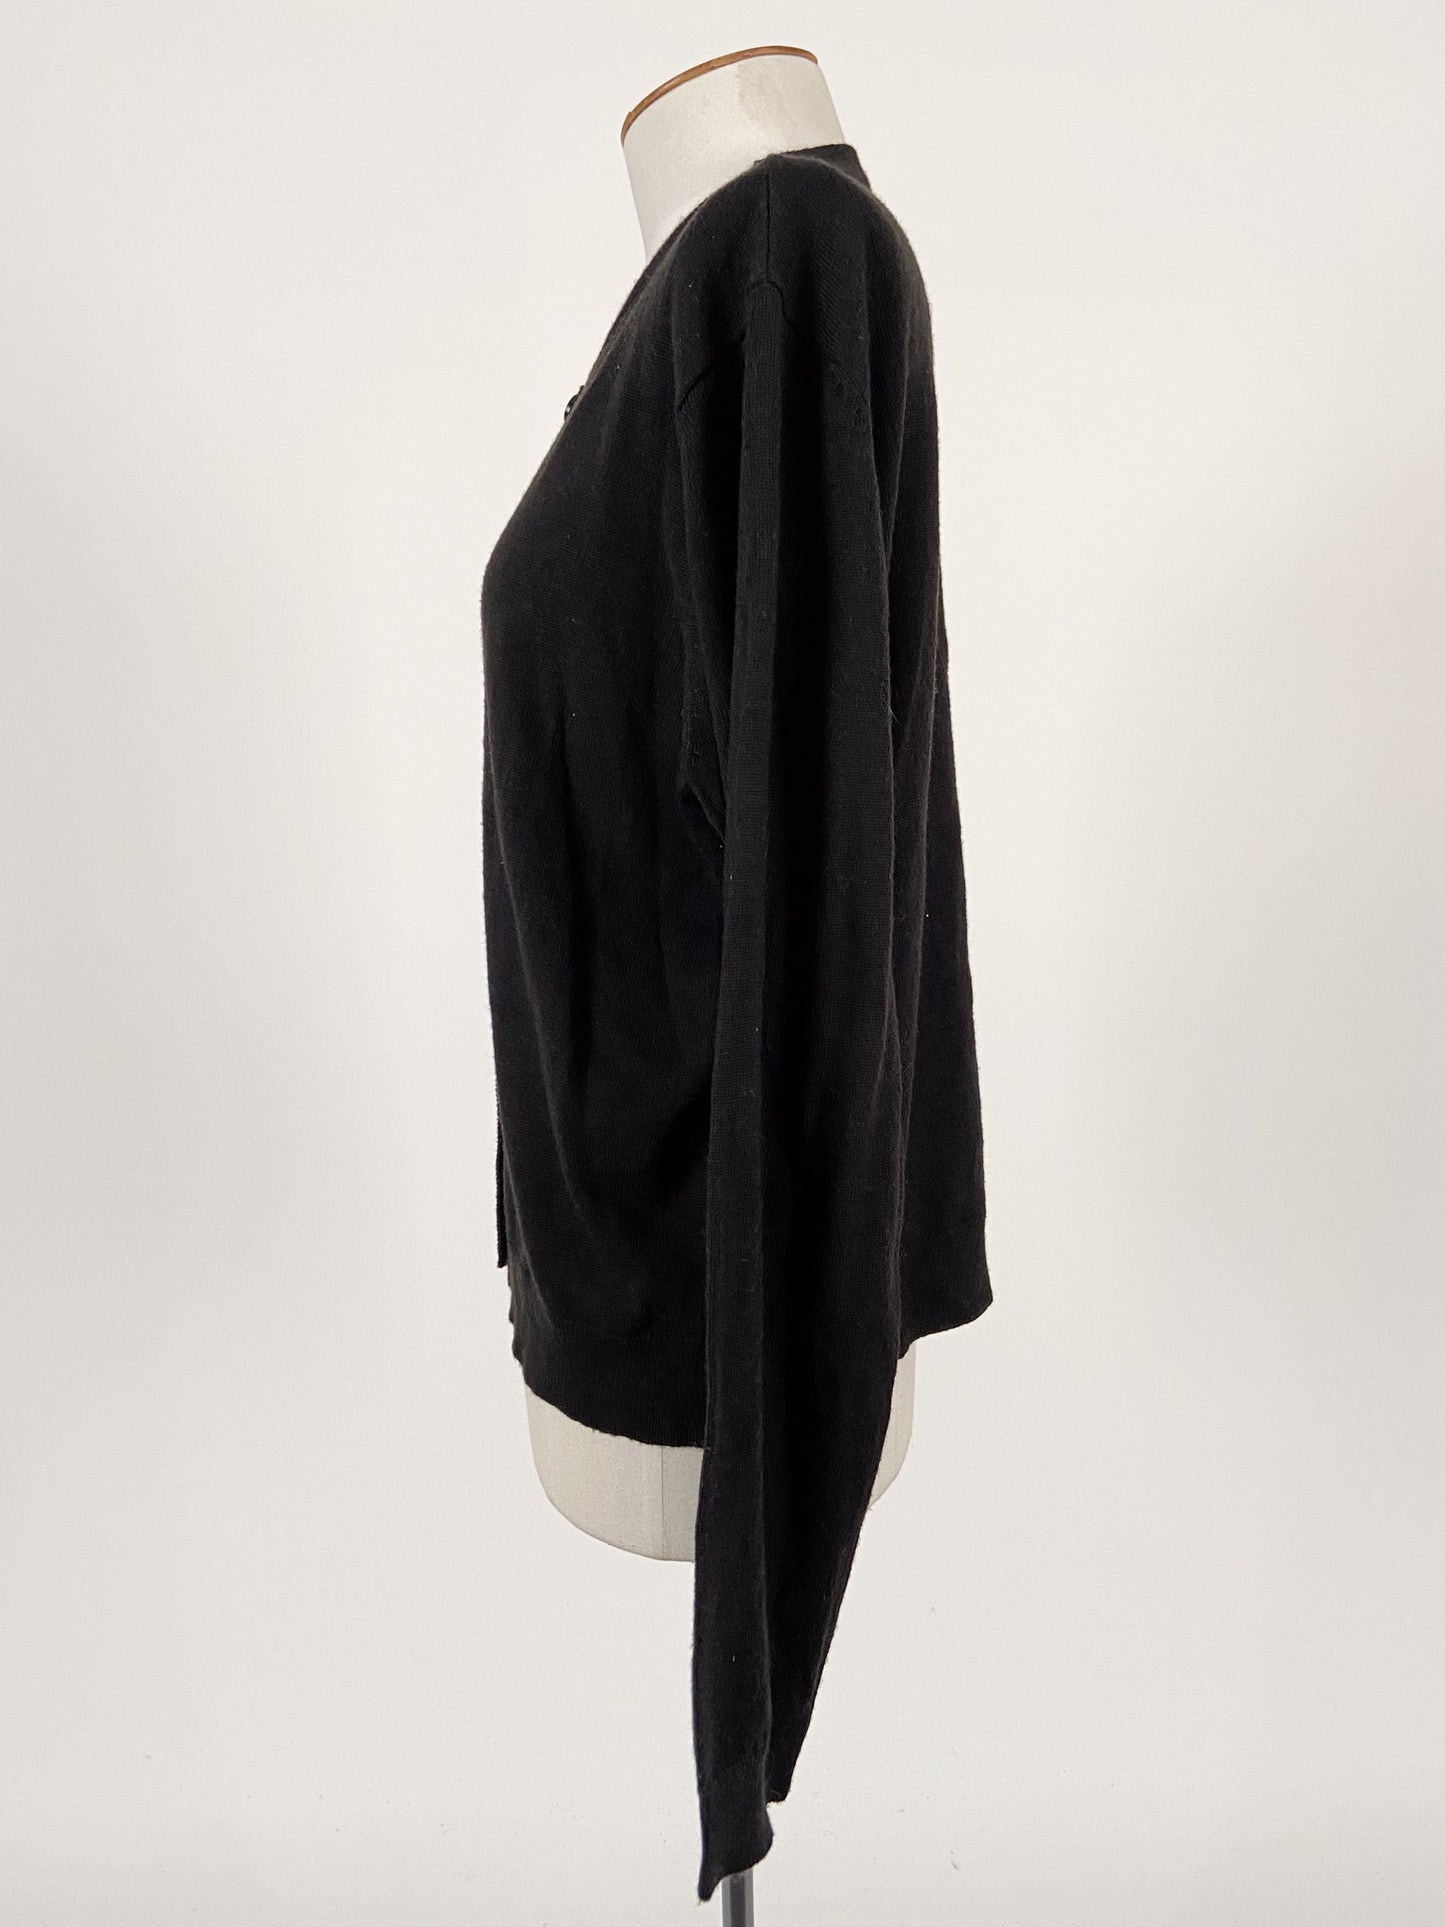 Unknown Brand | Black Casual/Workwear Cardigan | Size M